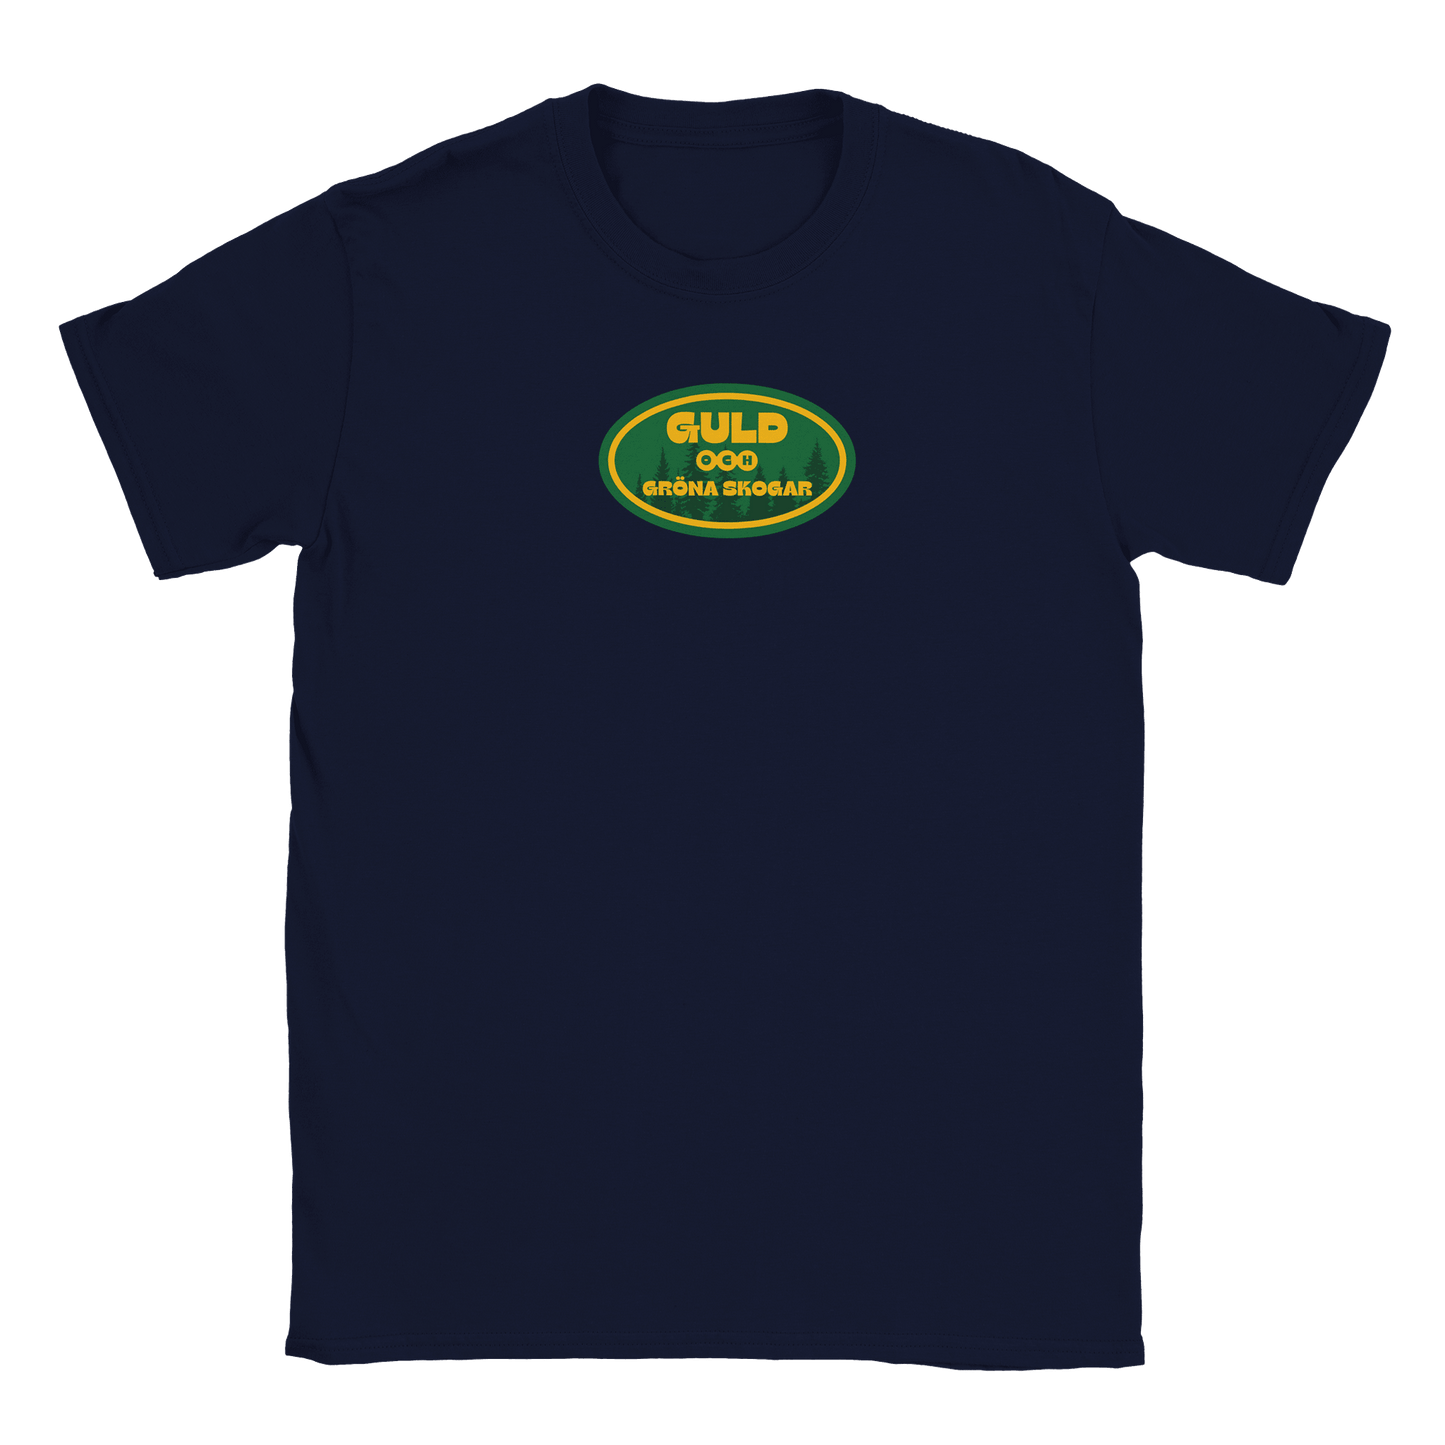 Guld och gröna skogar - T-shirt Marinblå